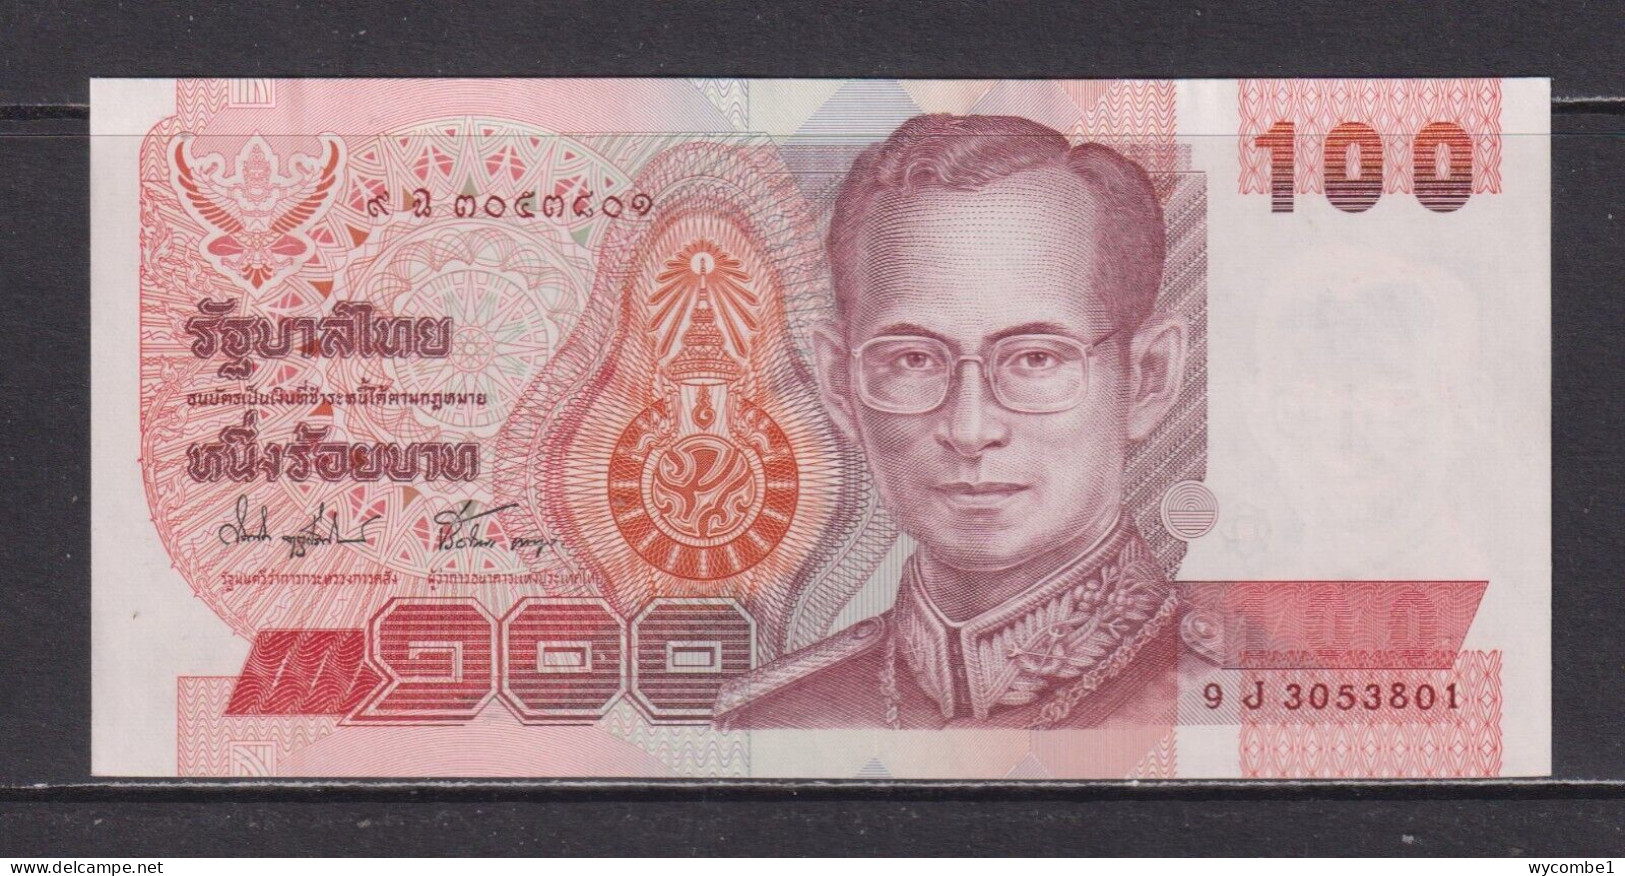 THAILAND - 1994 100 Baht AUNC Banknote - Thailand